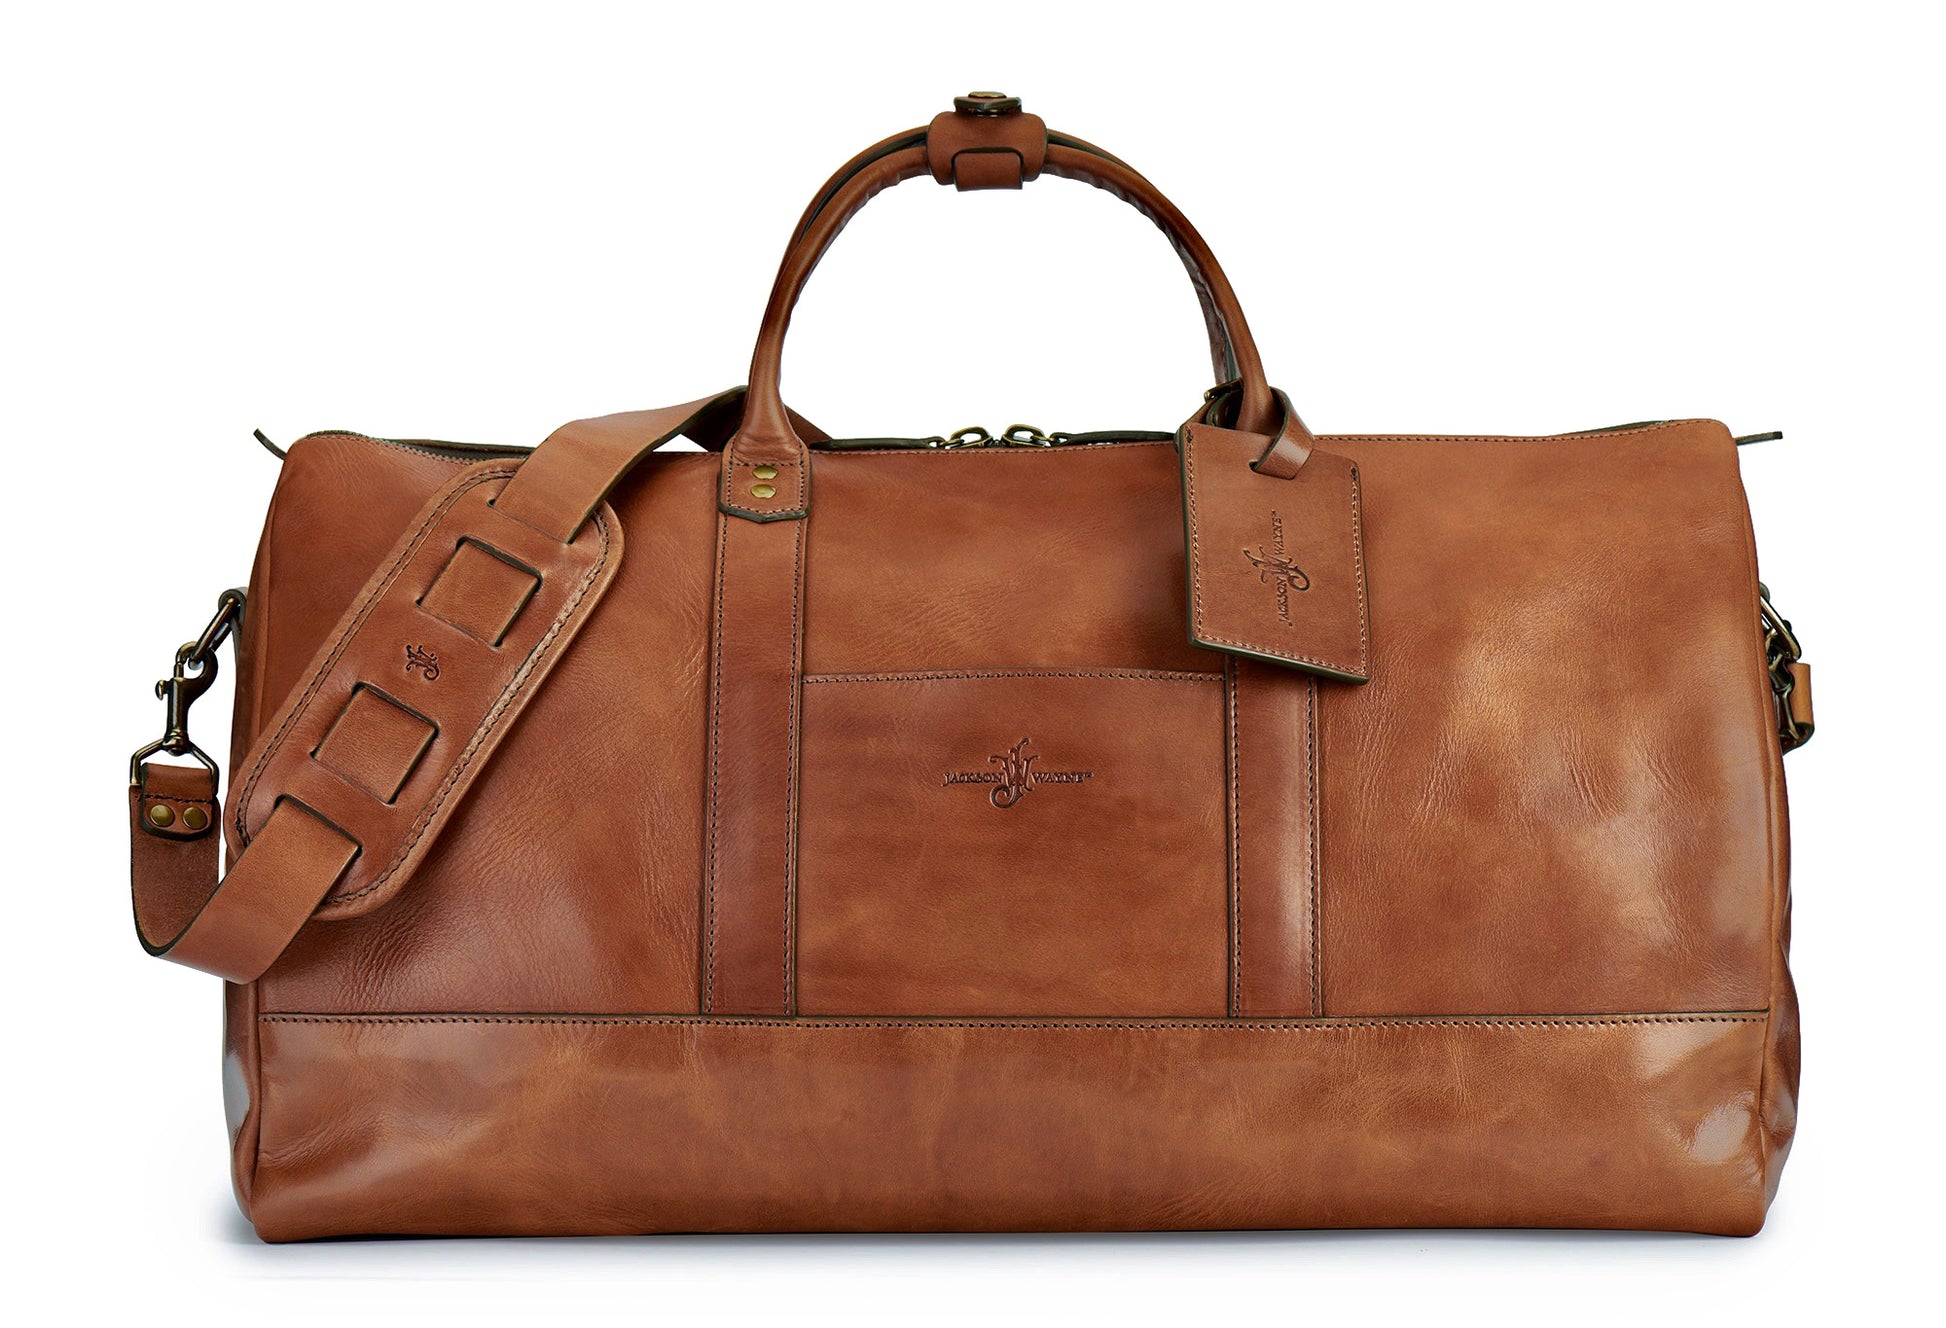 saddle tan full grain leather weekender bag with luggage tag in saddle tan